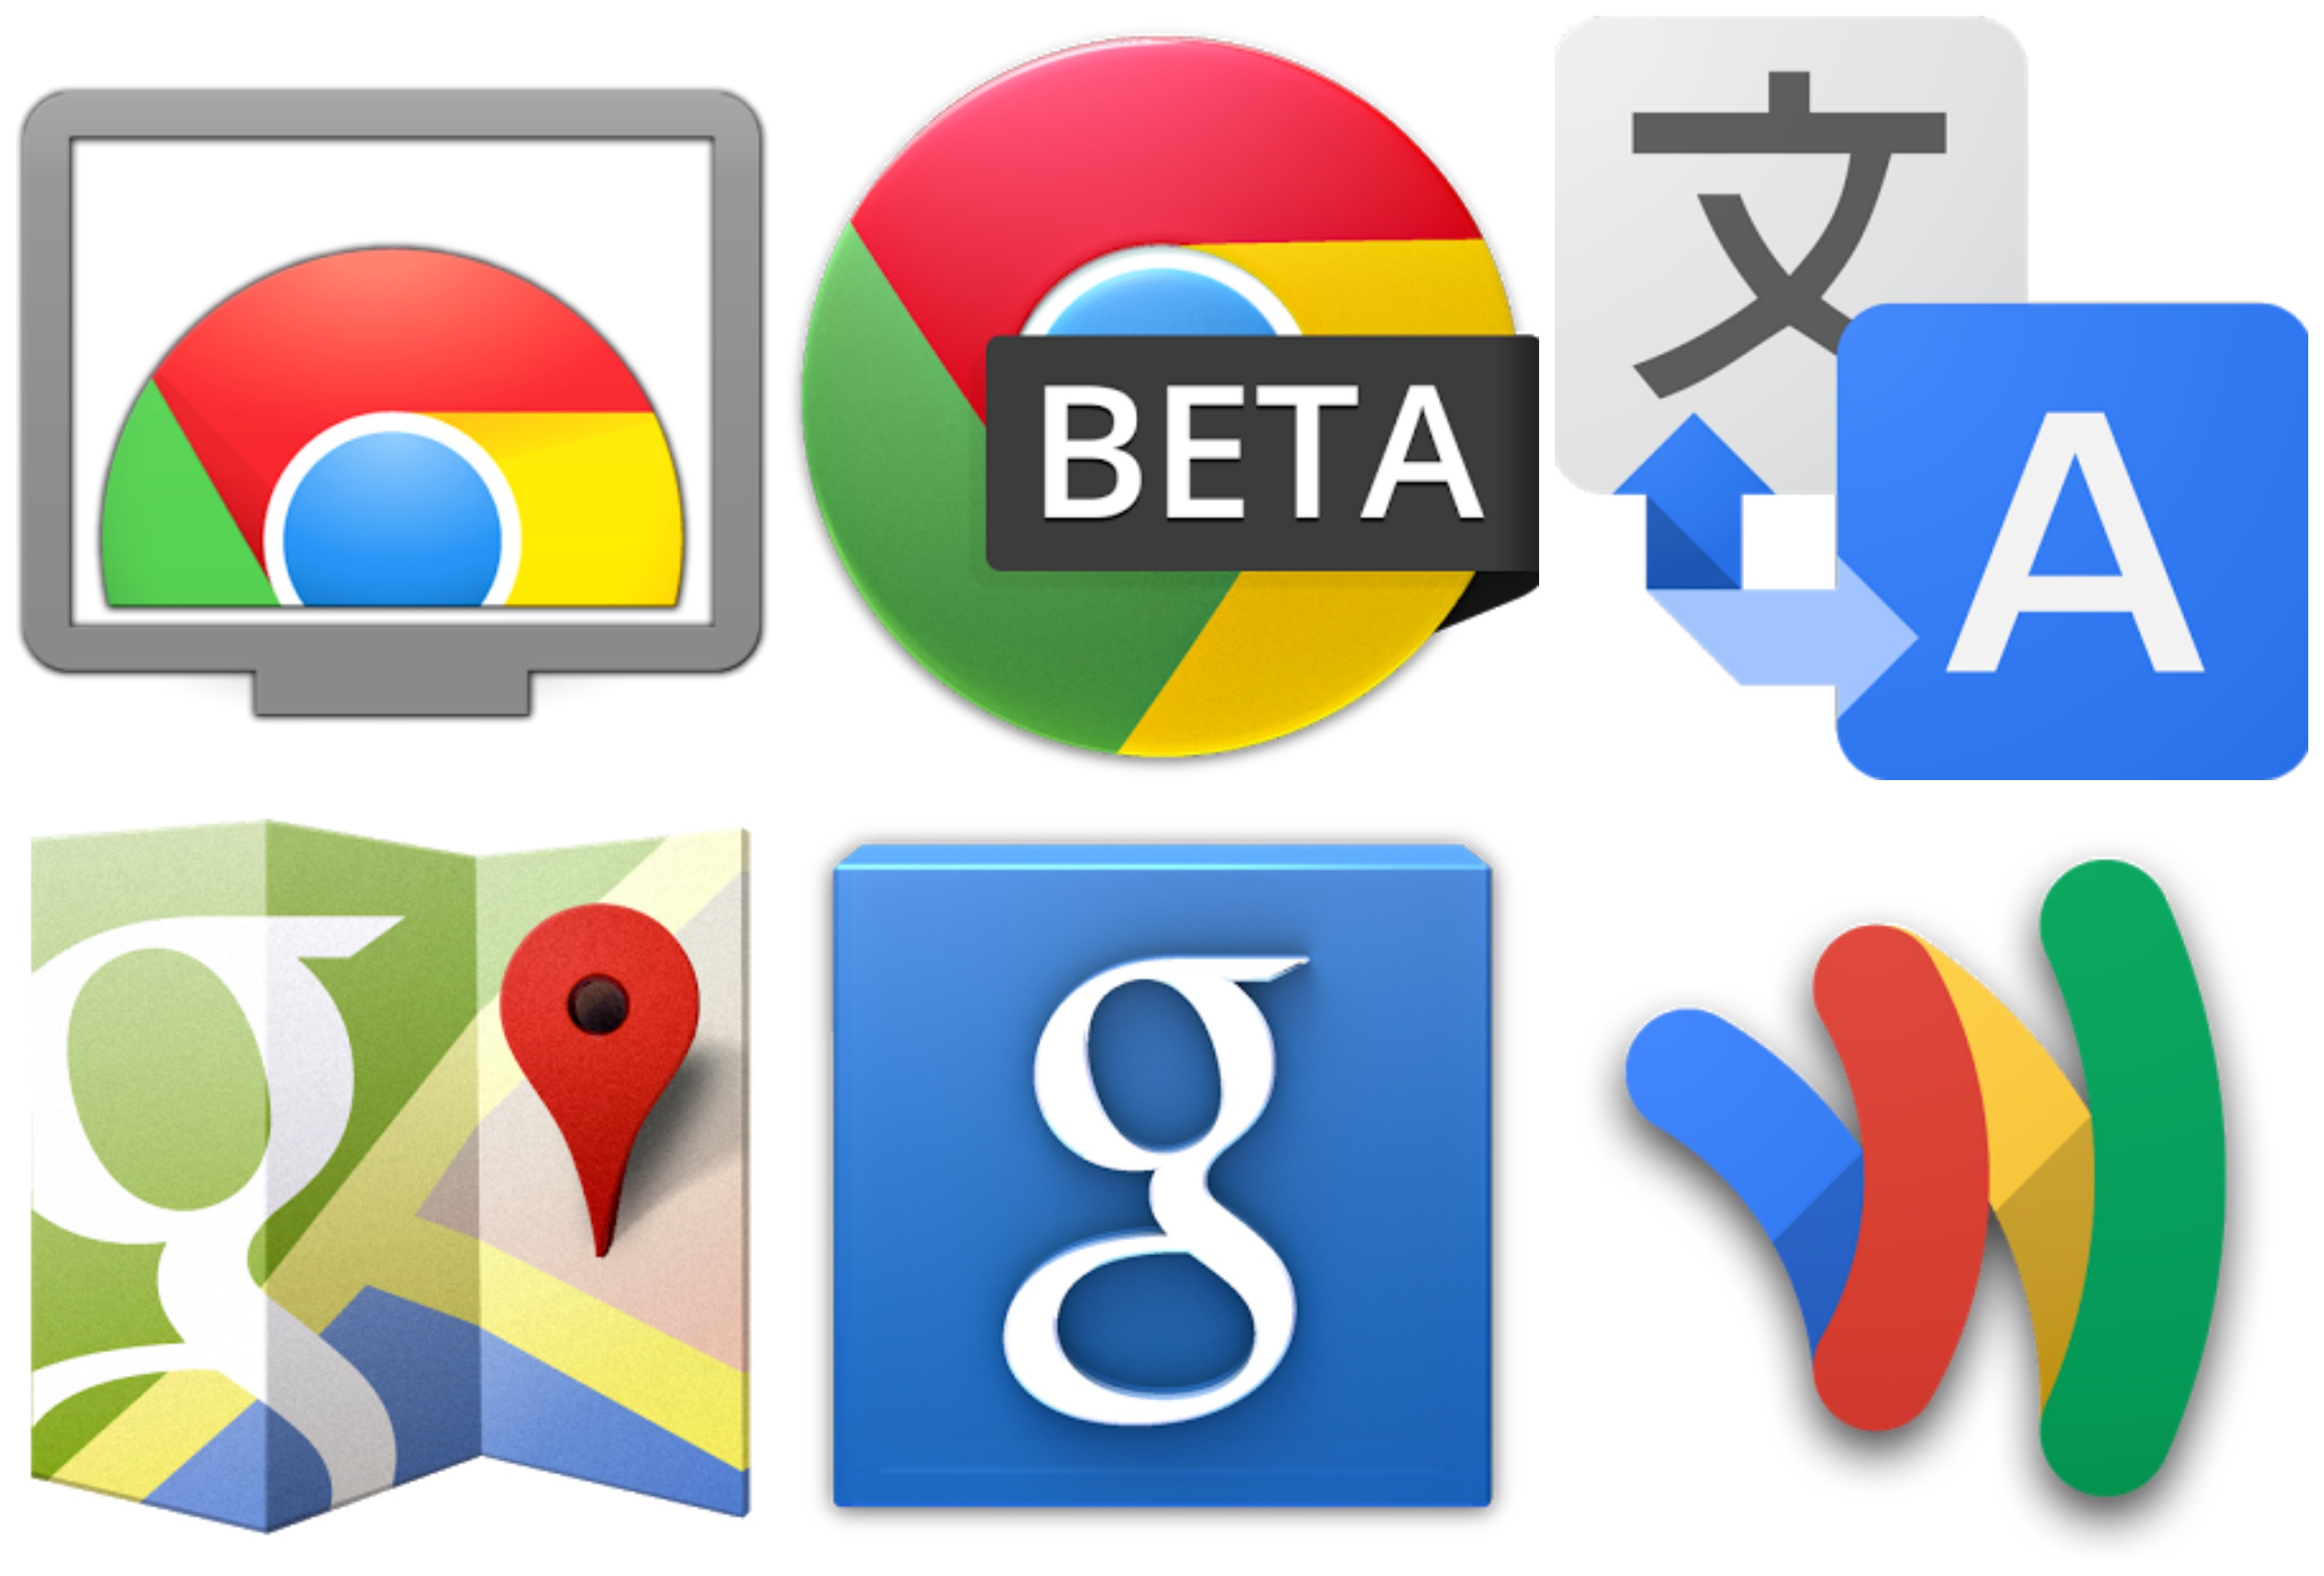 Google app updates for Wednesday: Maps, Search, Translate, Chromecast